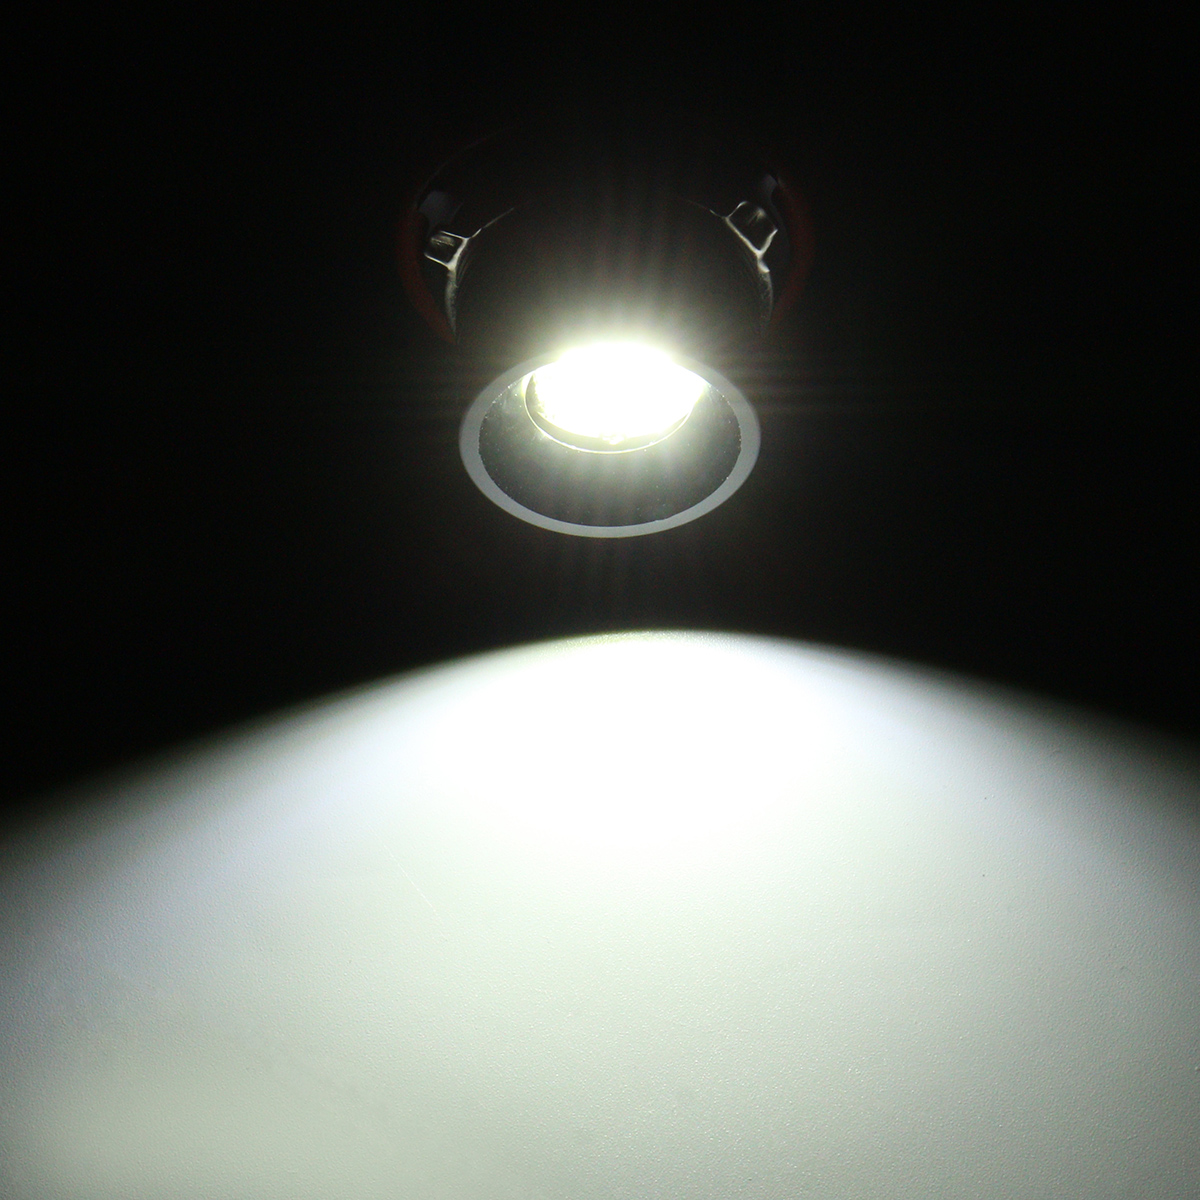 80W LED Angel Eyes Lights Halo Ring Bulbs Lamps CANBUS Error Free White 2PCS for BMW E39 E60 E53